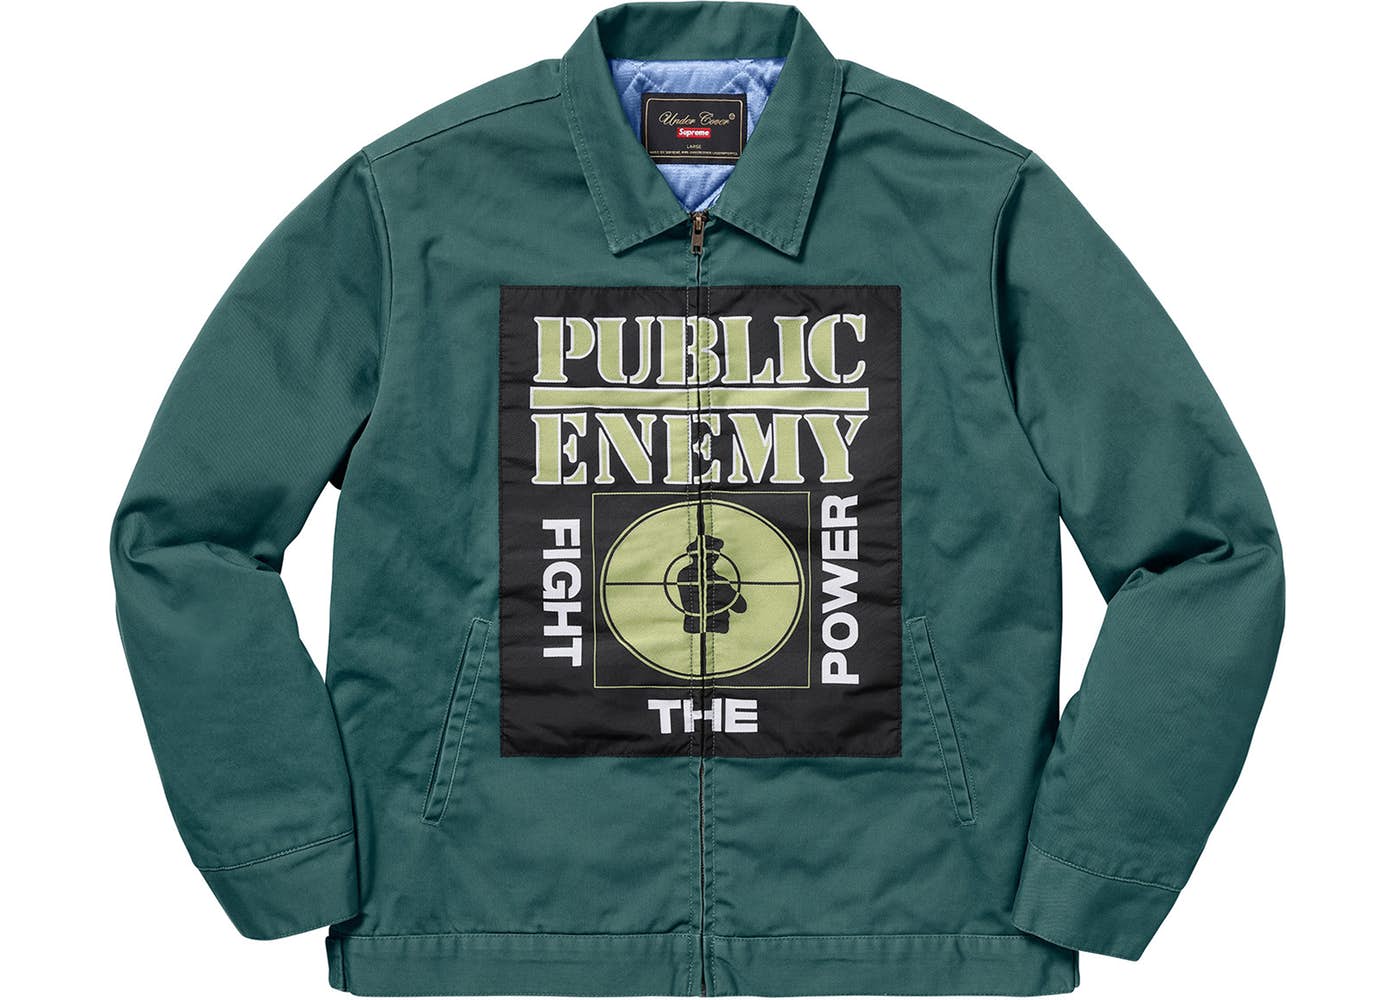 Supreme Undercover Public Enemy Long Sleeve Black T-Shirt